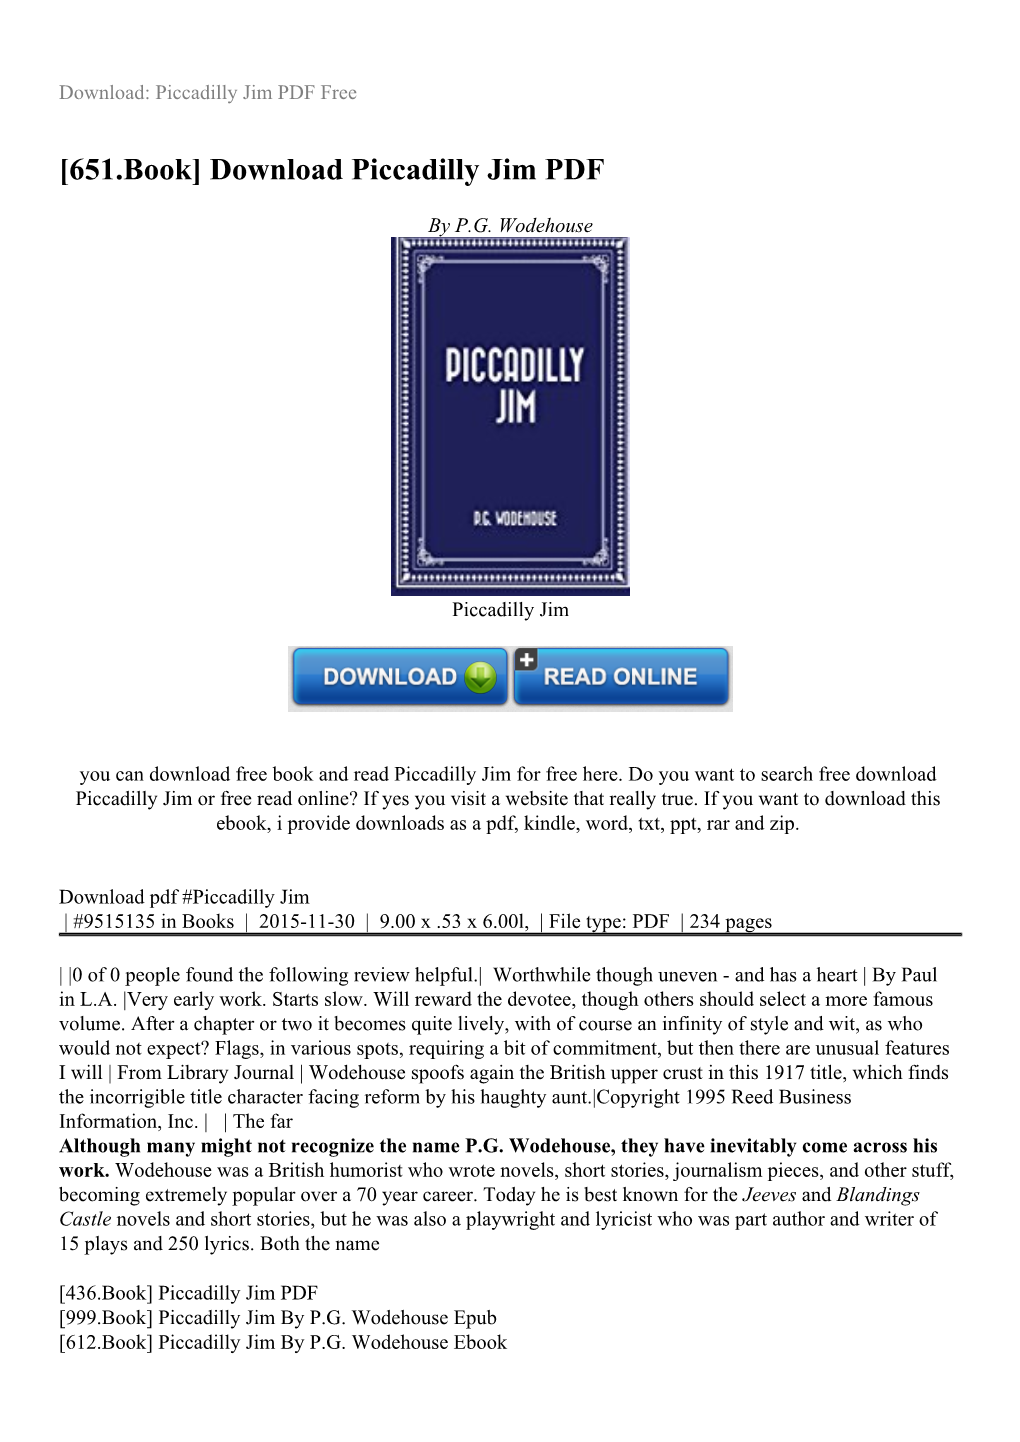 Download Piccadilly Jim PDF